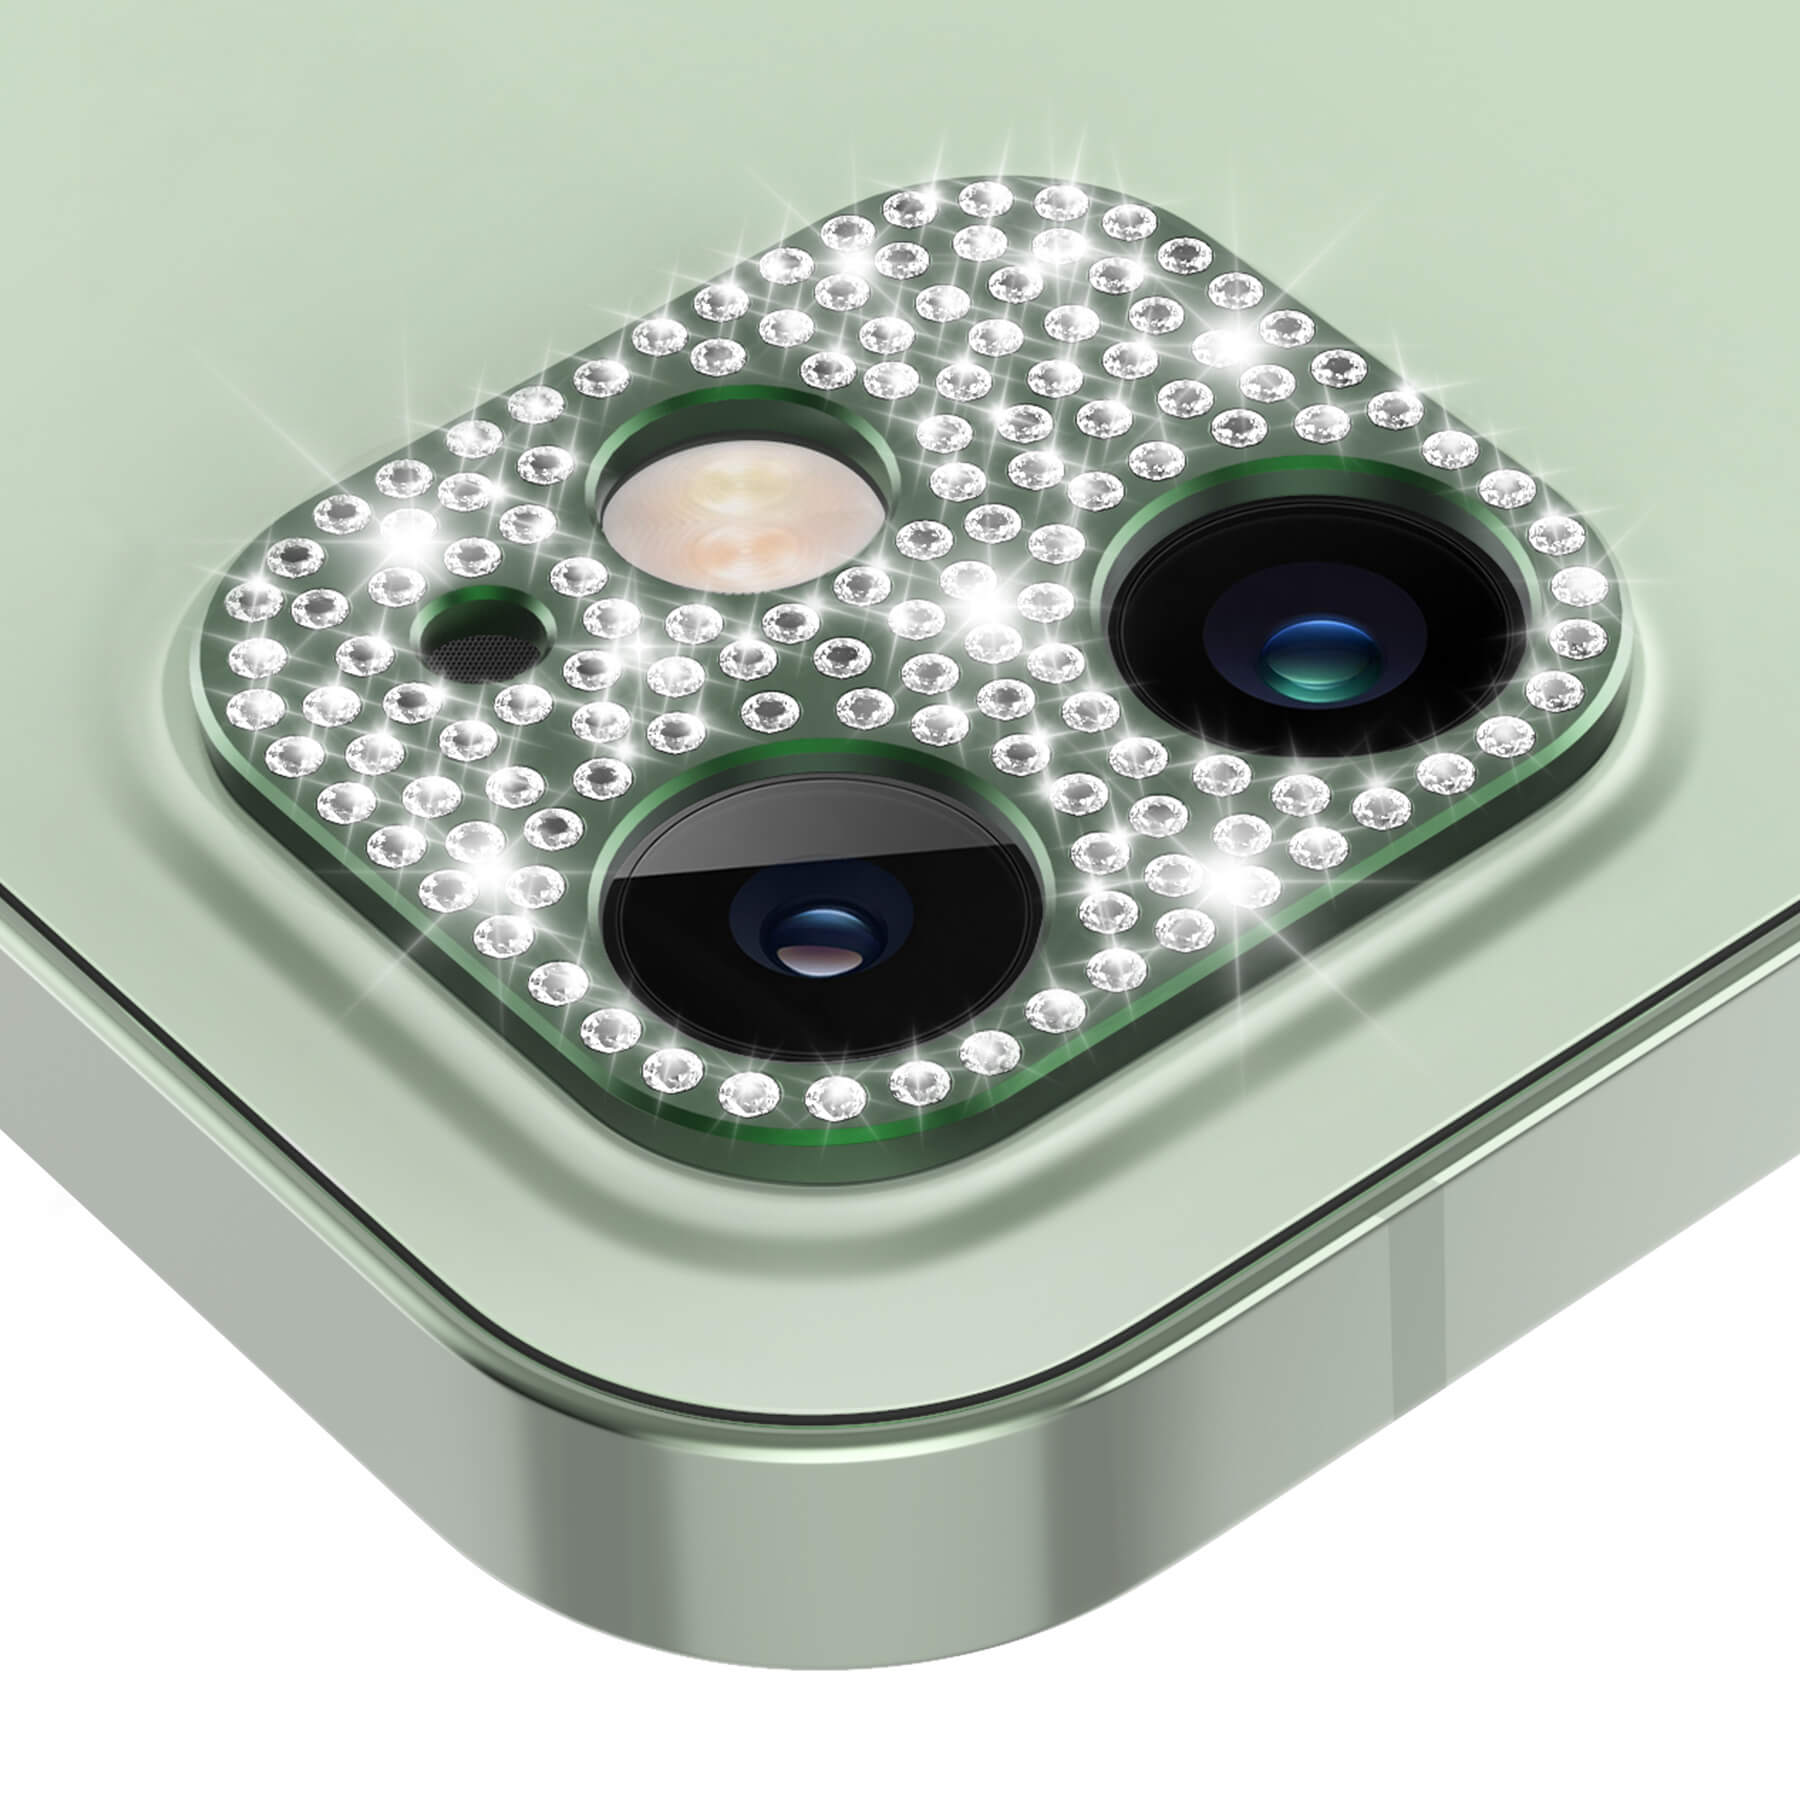 bling diamond iPhone 12 camera lens protector - alpine green